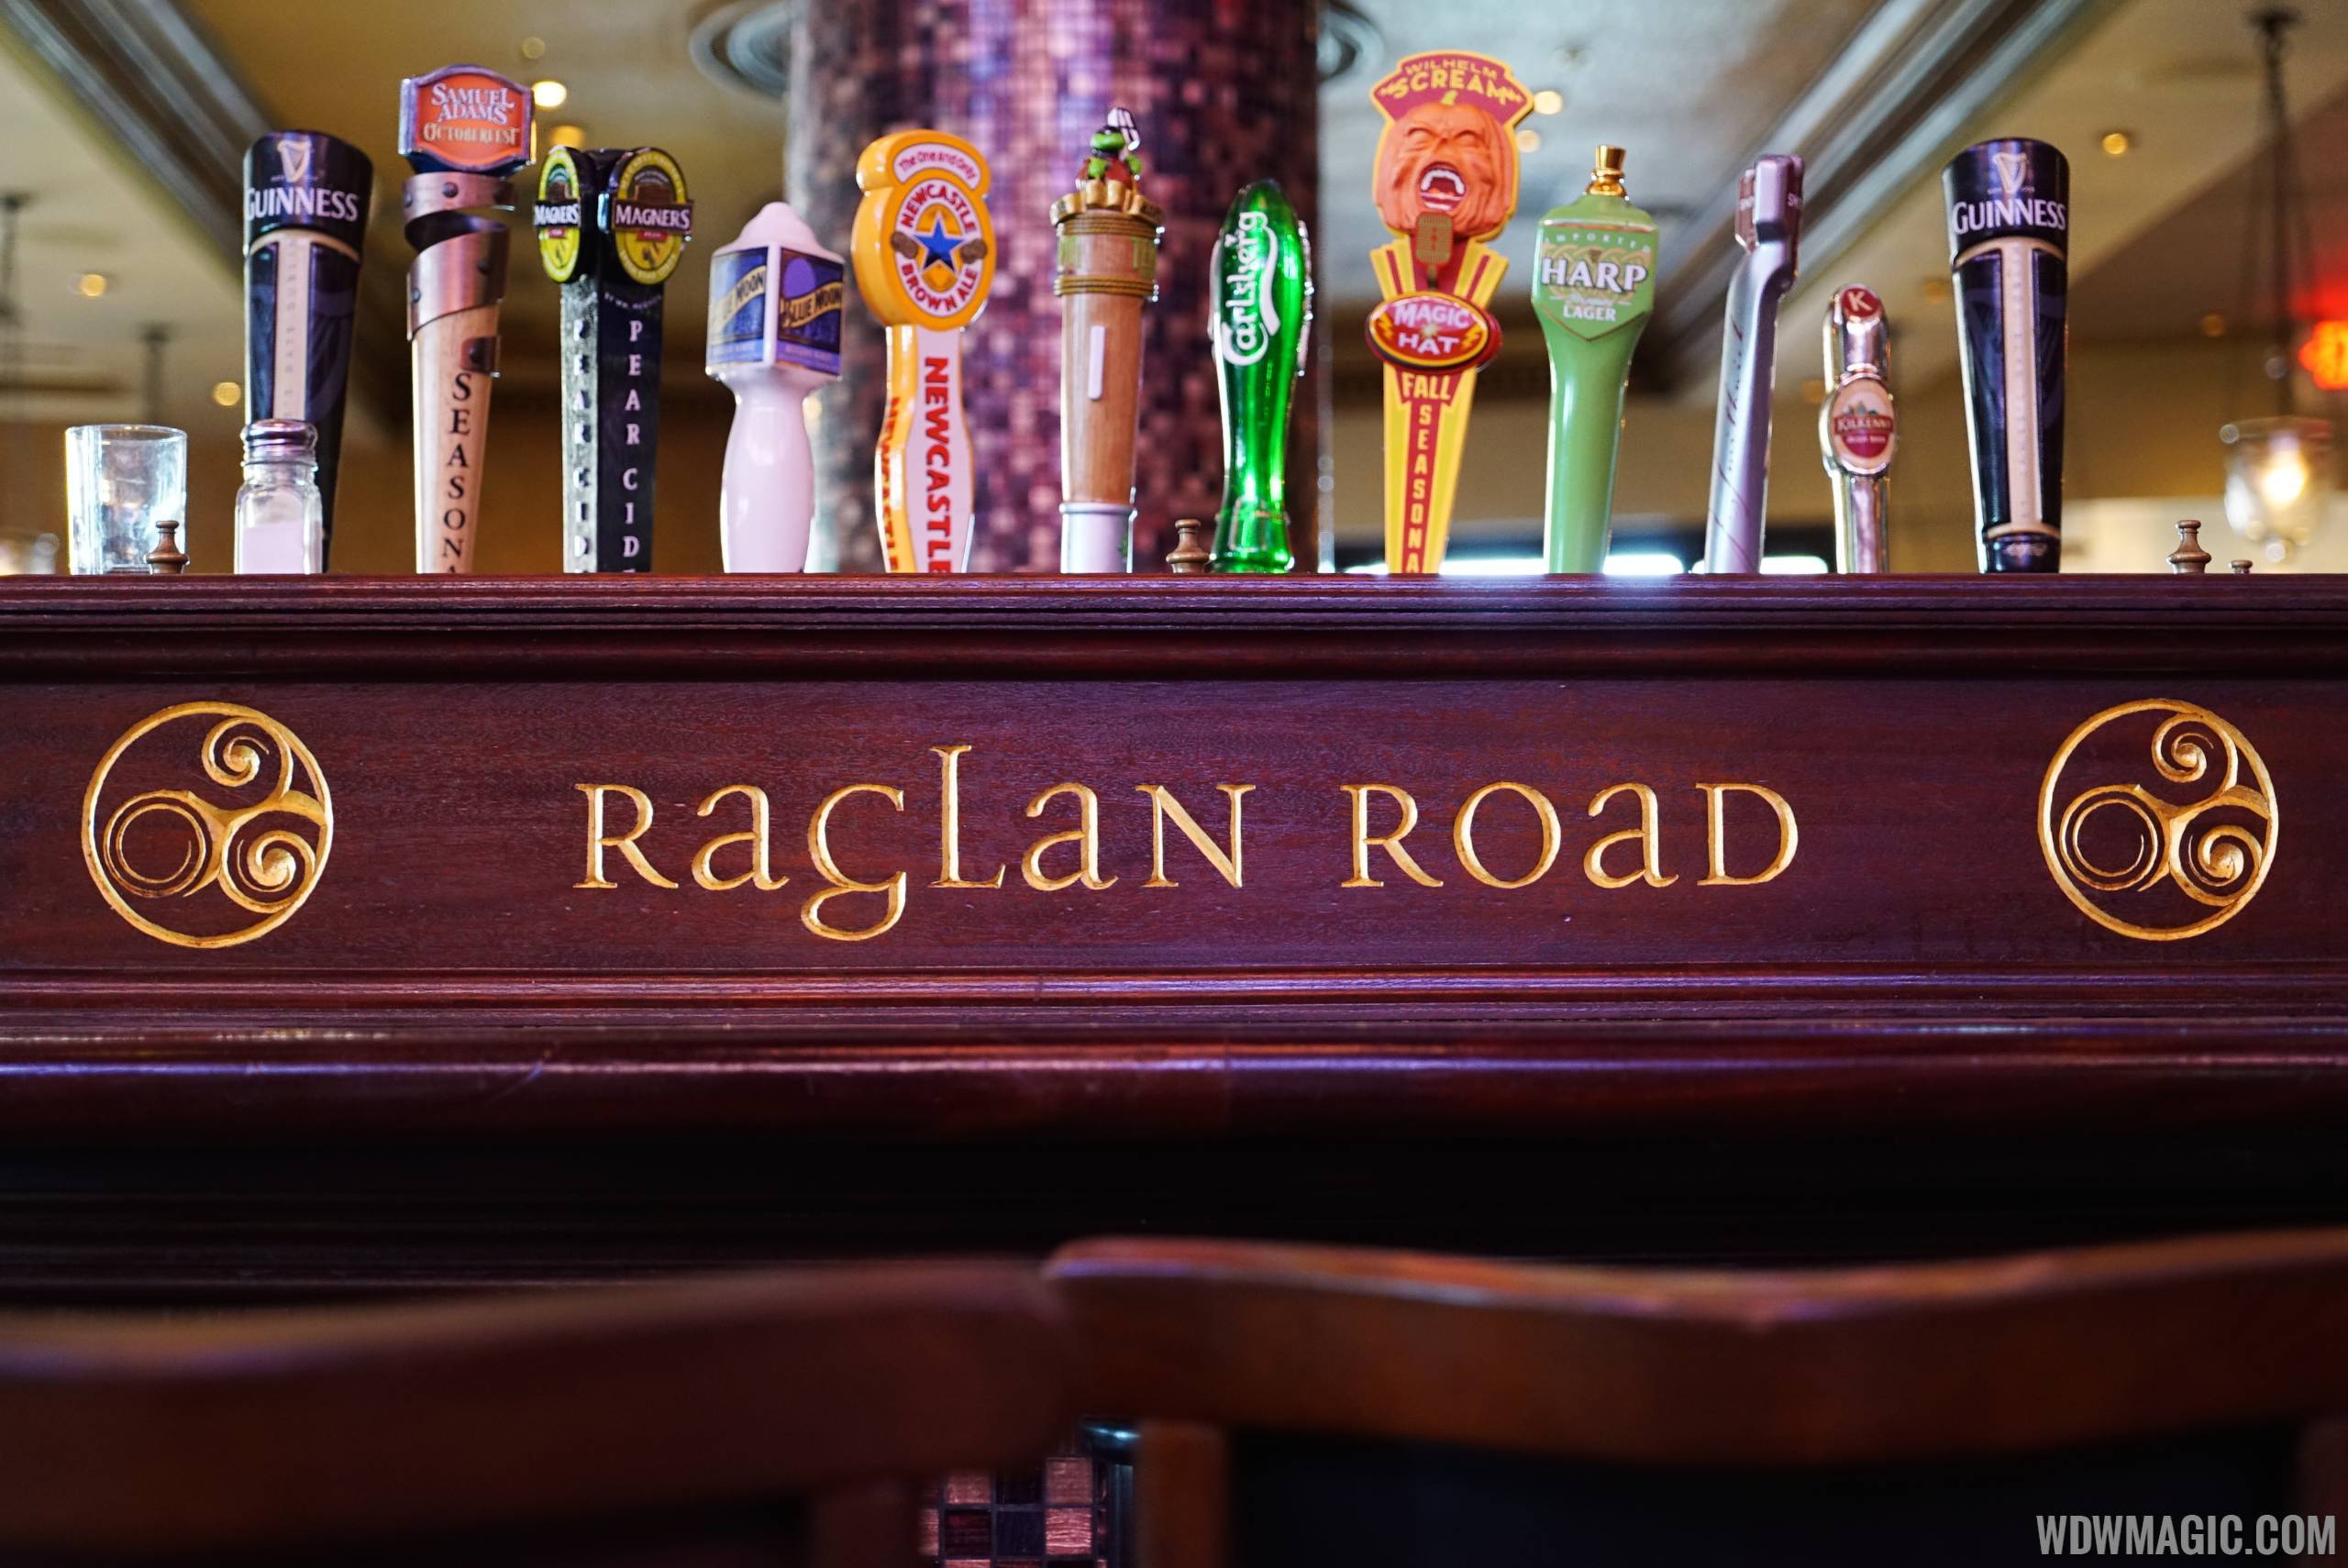 2017 Raglan Road Mighty St. Patrick's Festival begins tomorrow at Disney Springs